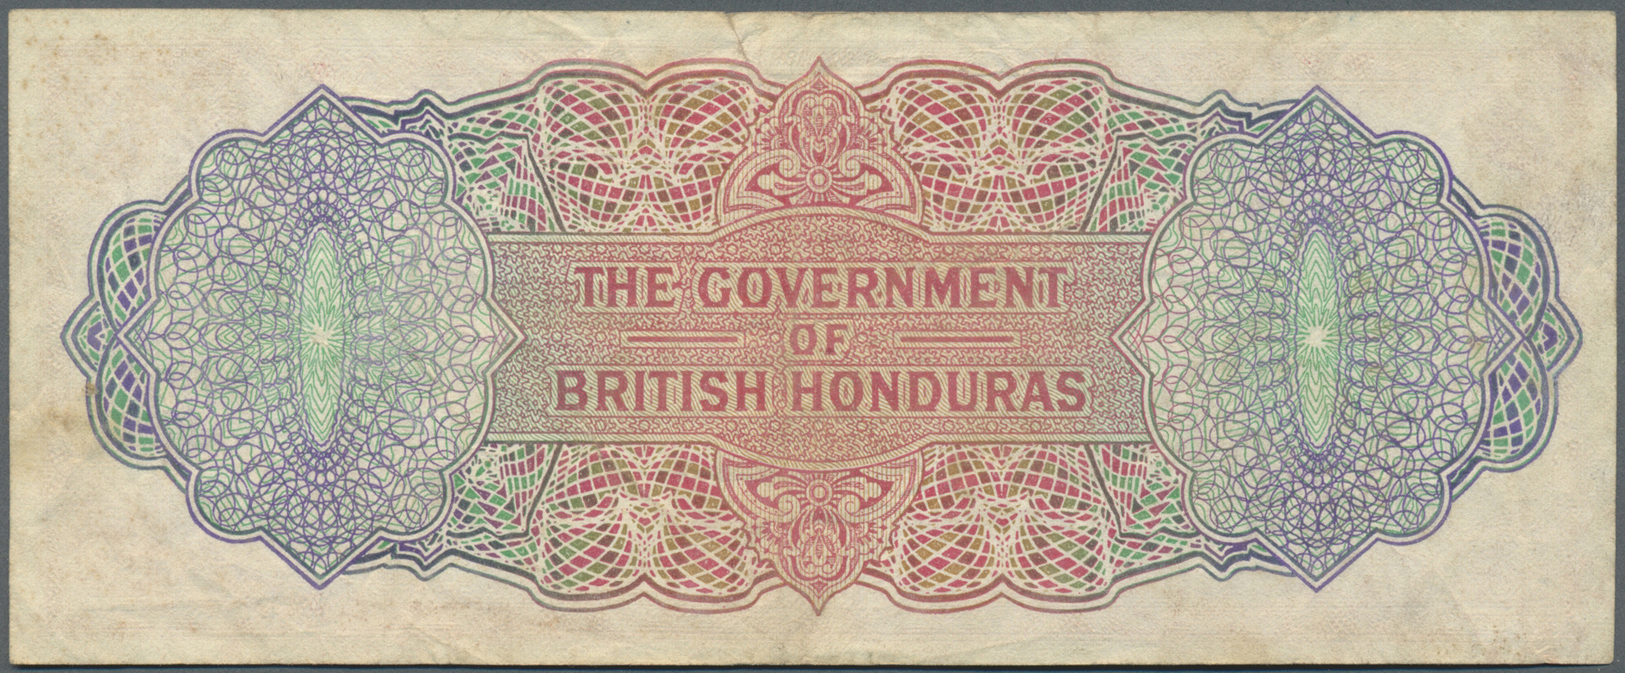 00347 British Honduras: 5 Dollars 1970 P. 30c, Used With Folds And Creases, One 0,5 Cm Border Tear At Upper Border, No H - Honduras